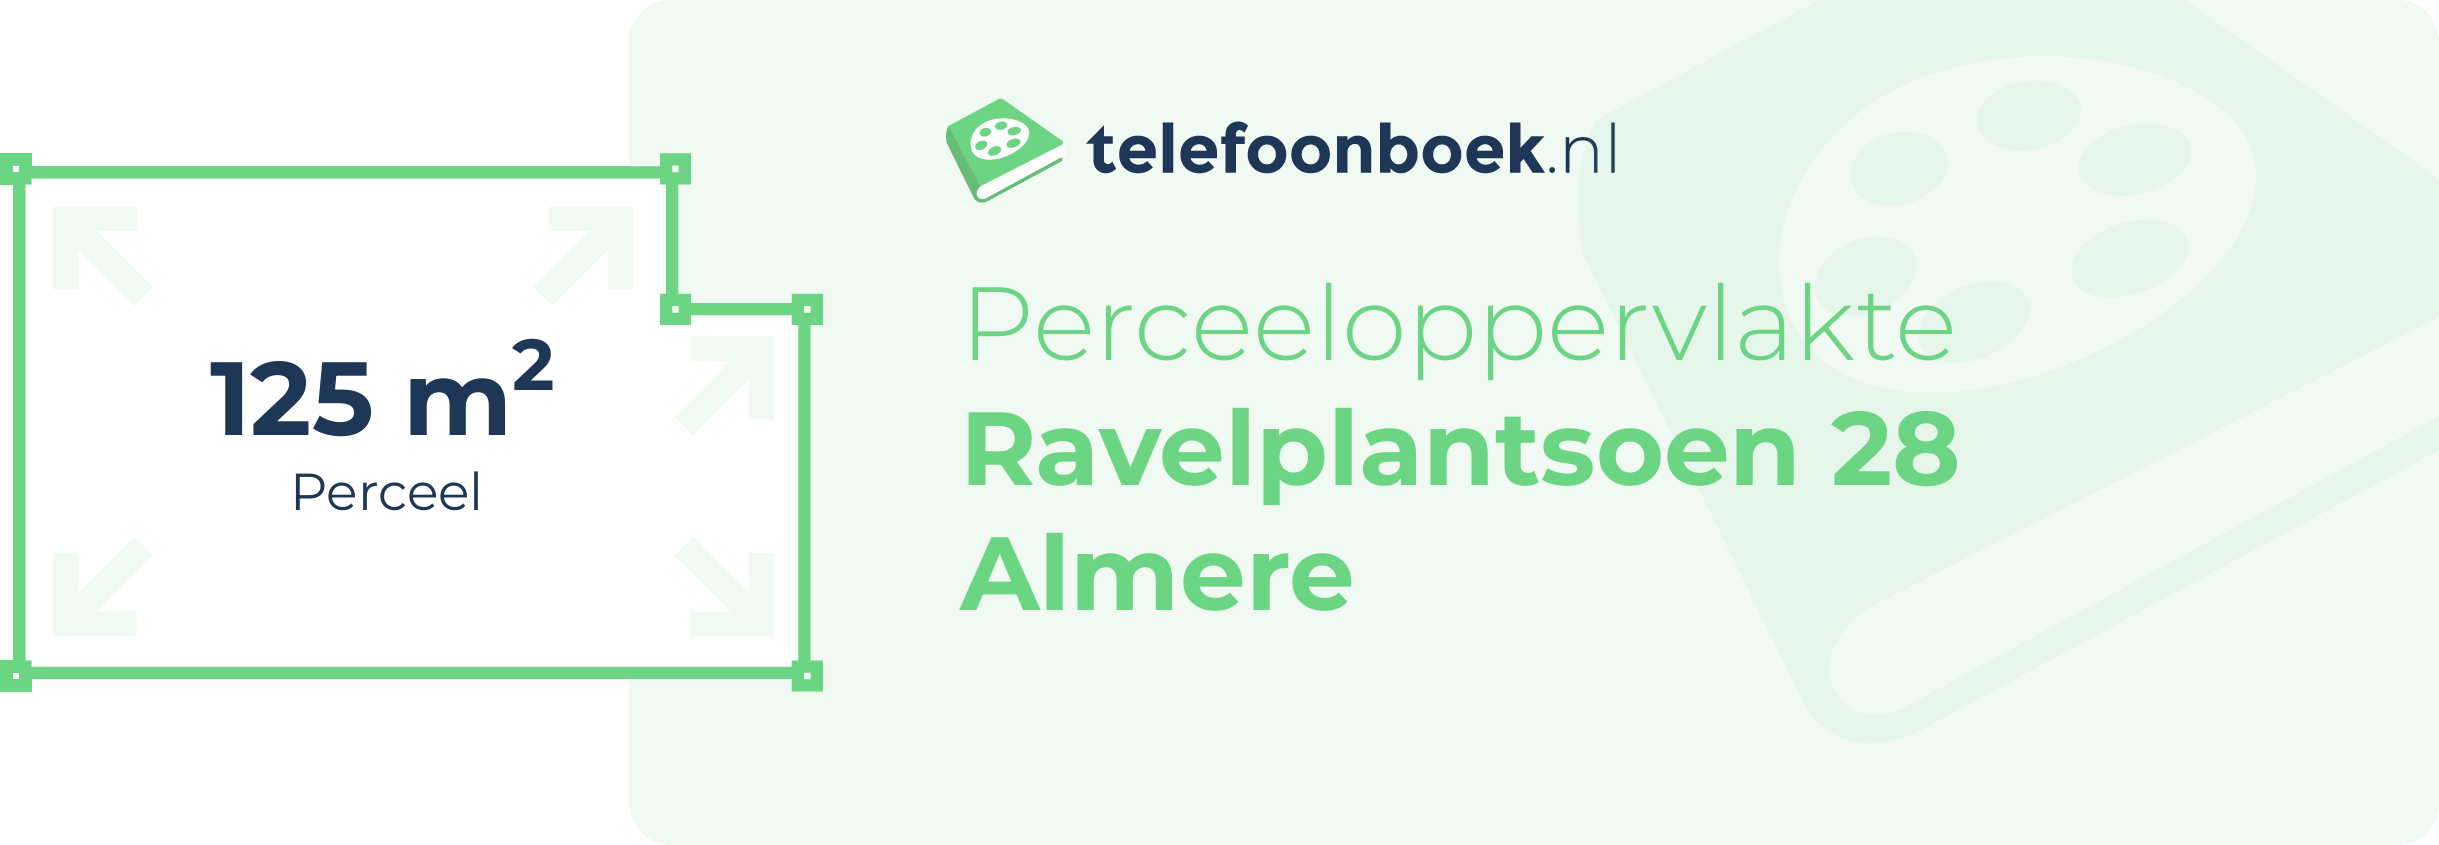 Perceeloppervlakte Ravelplantsoen 28 Almere